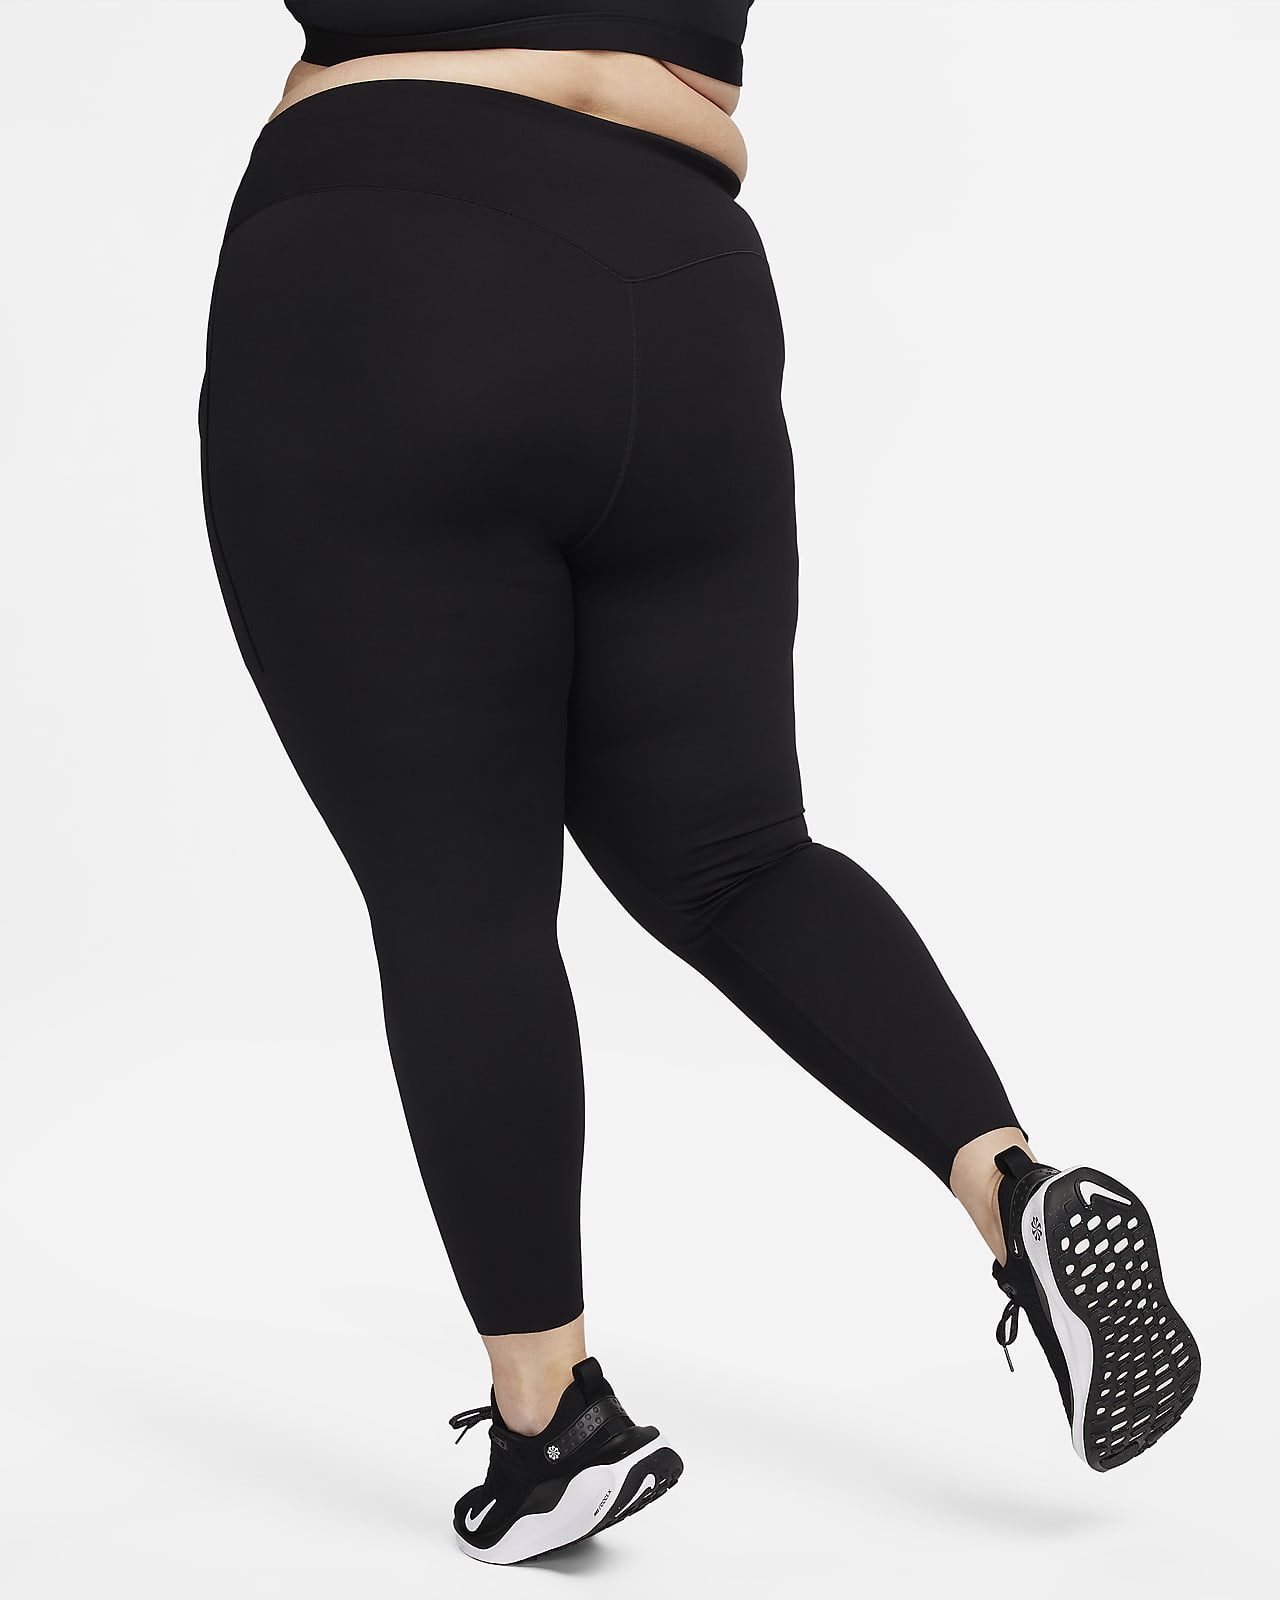 Nike woman's Leggings Size S